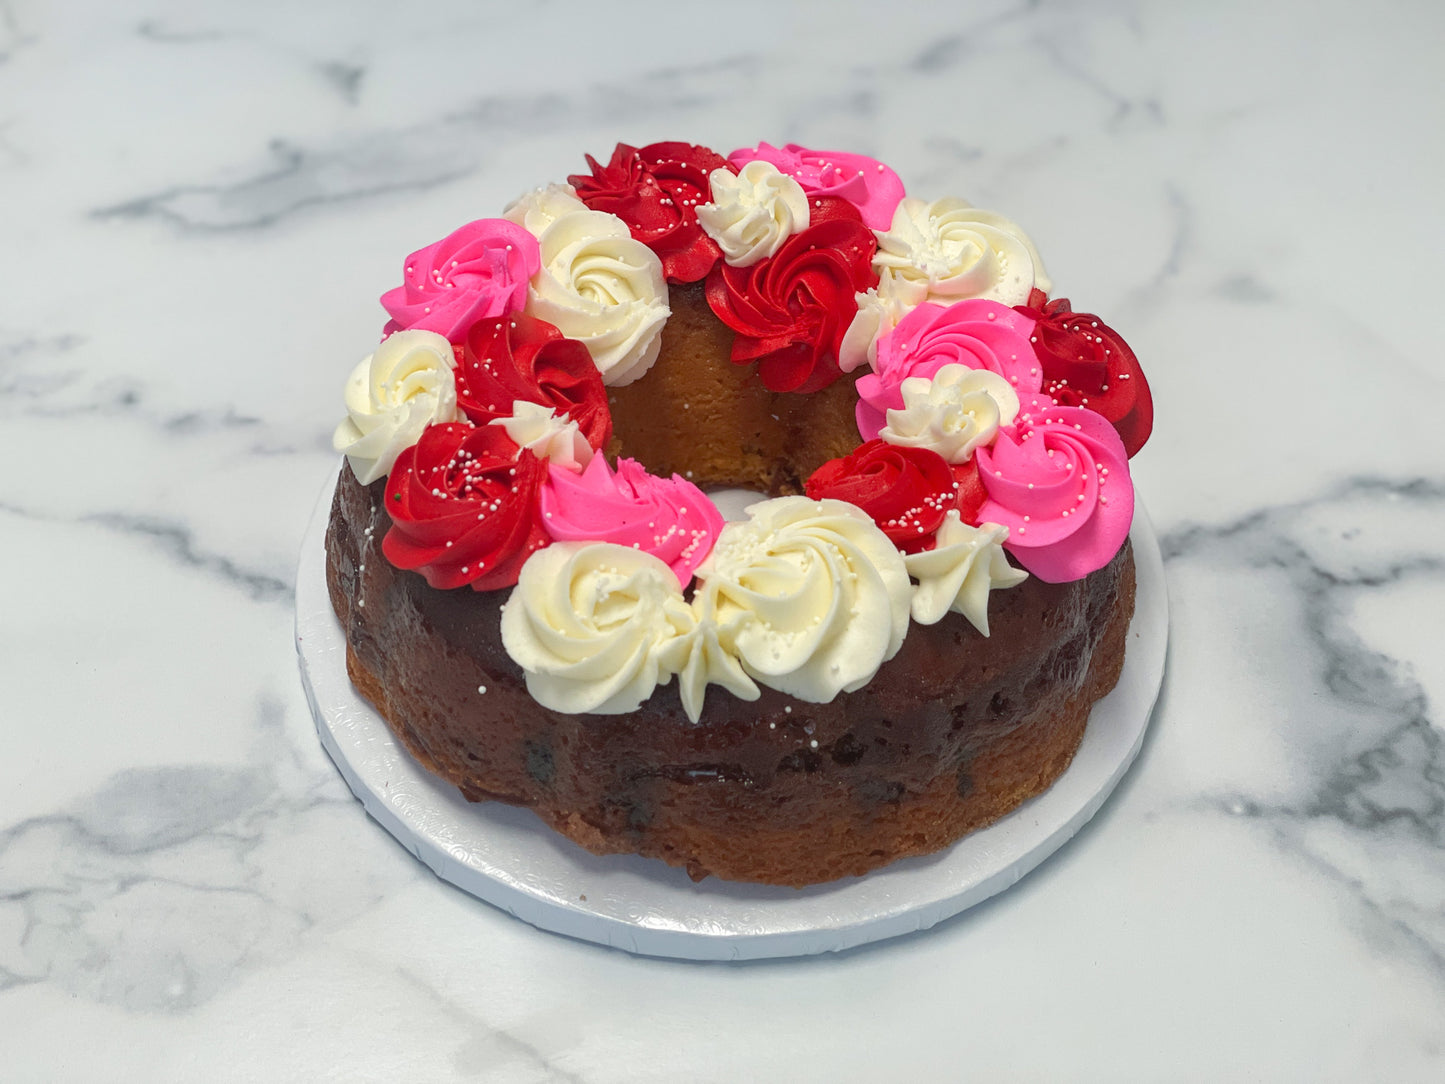 Floral Coffee Cake Valentine's bundt cake